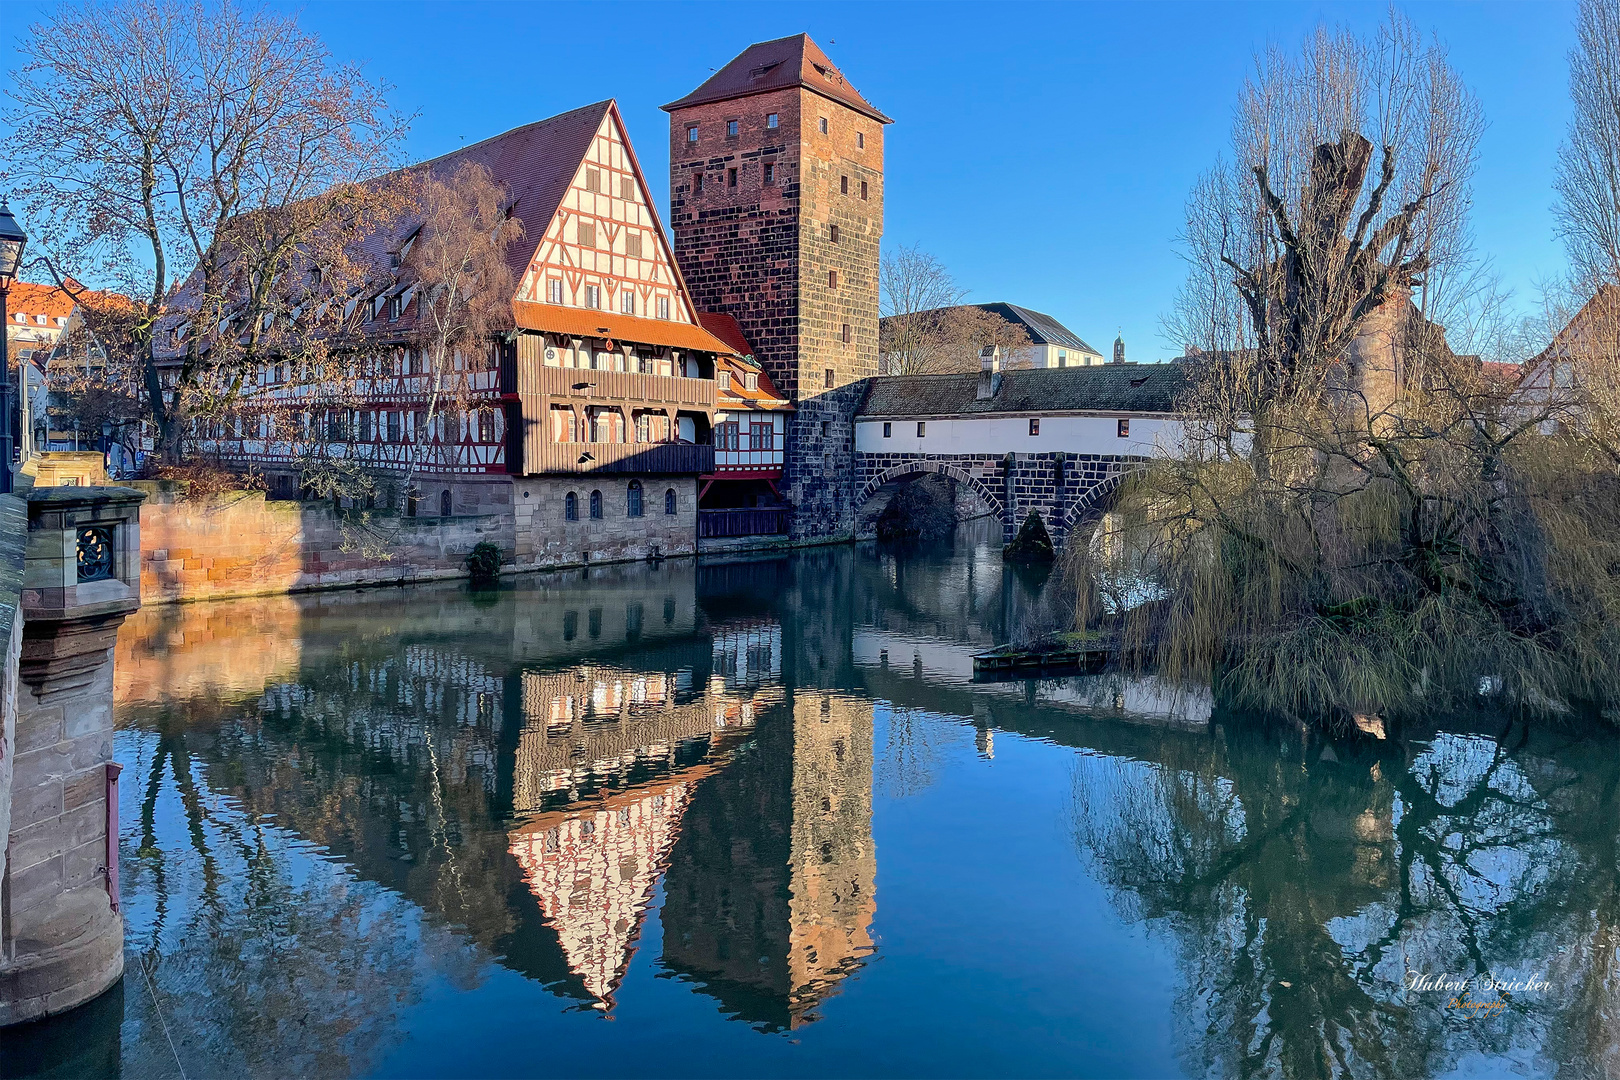 "Nürnberg" Der Wasserturm neben dem Weinstadel